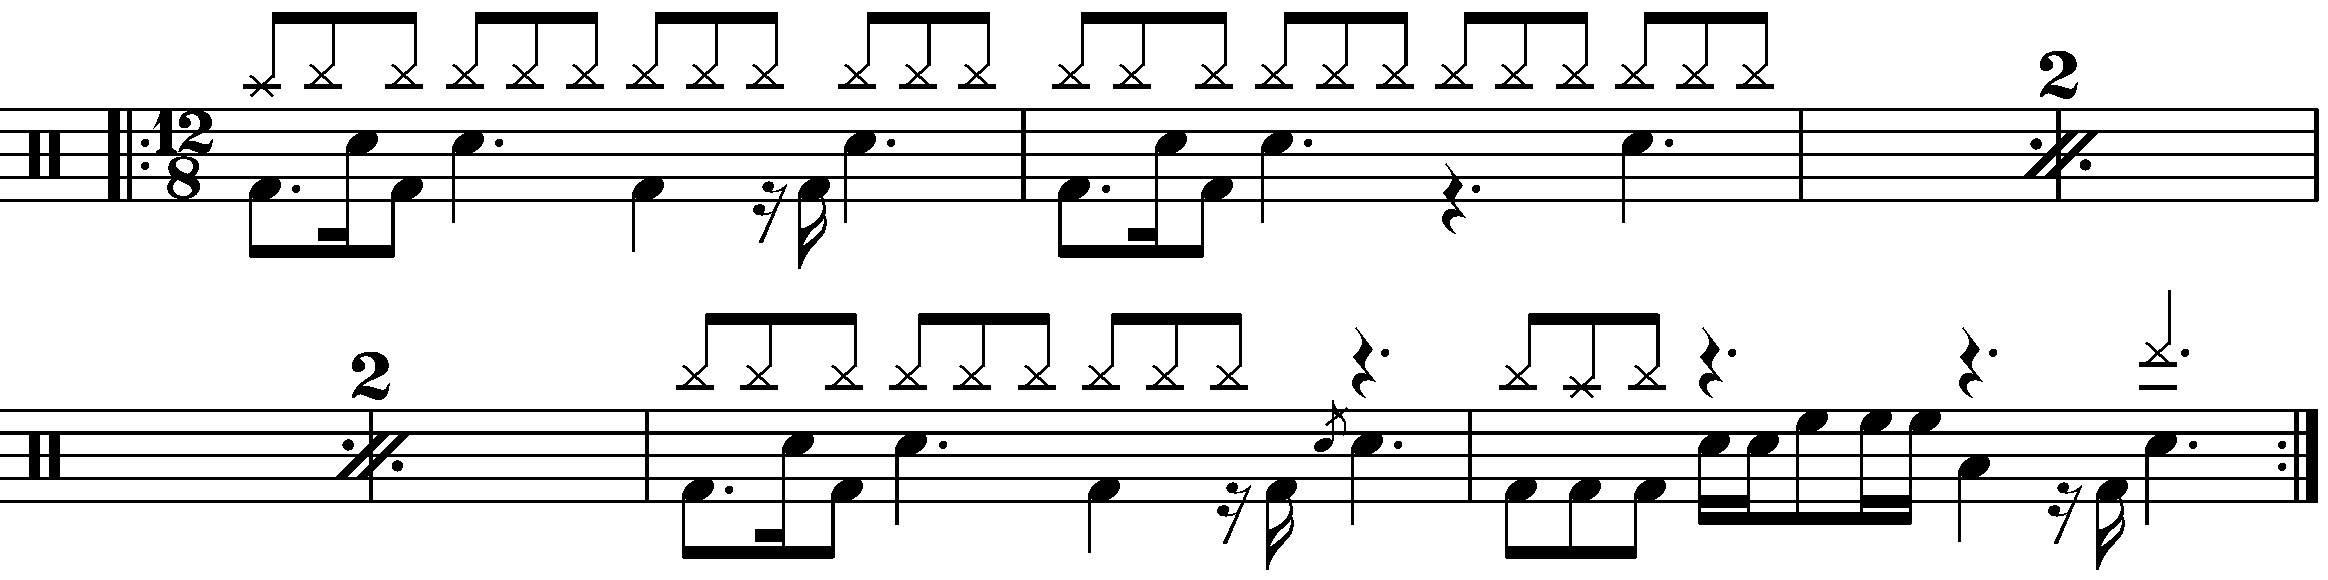 An eight bar phrase built of an AAAB pattern using 2 bar 12/8 grooves